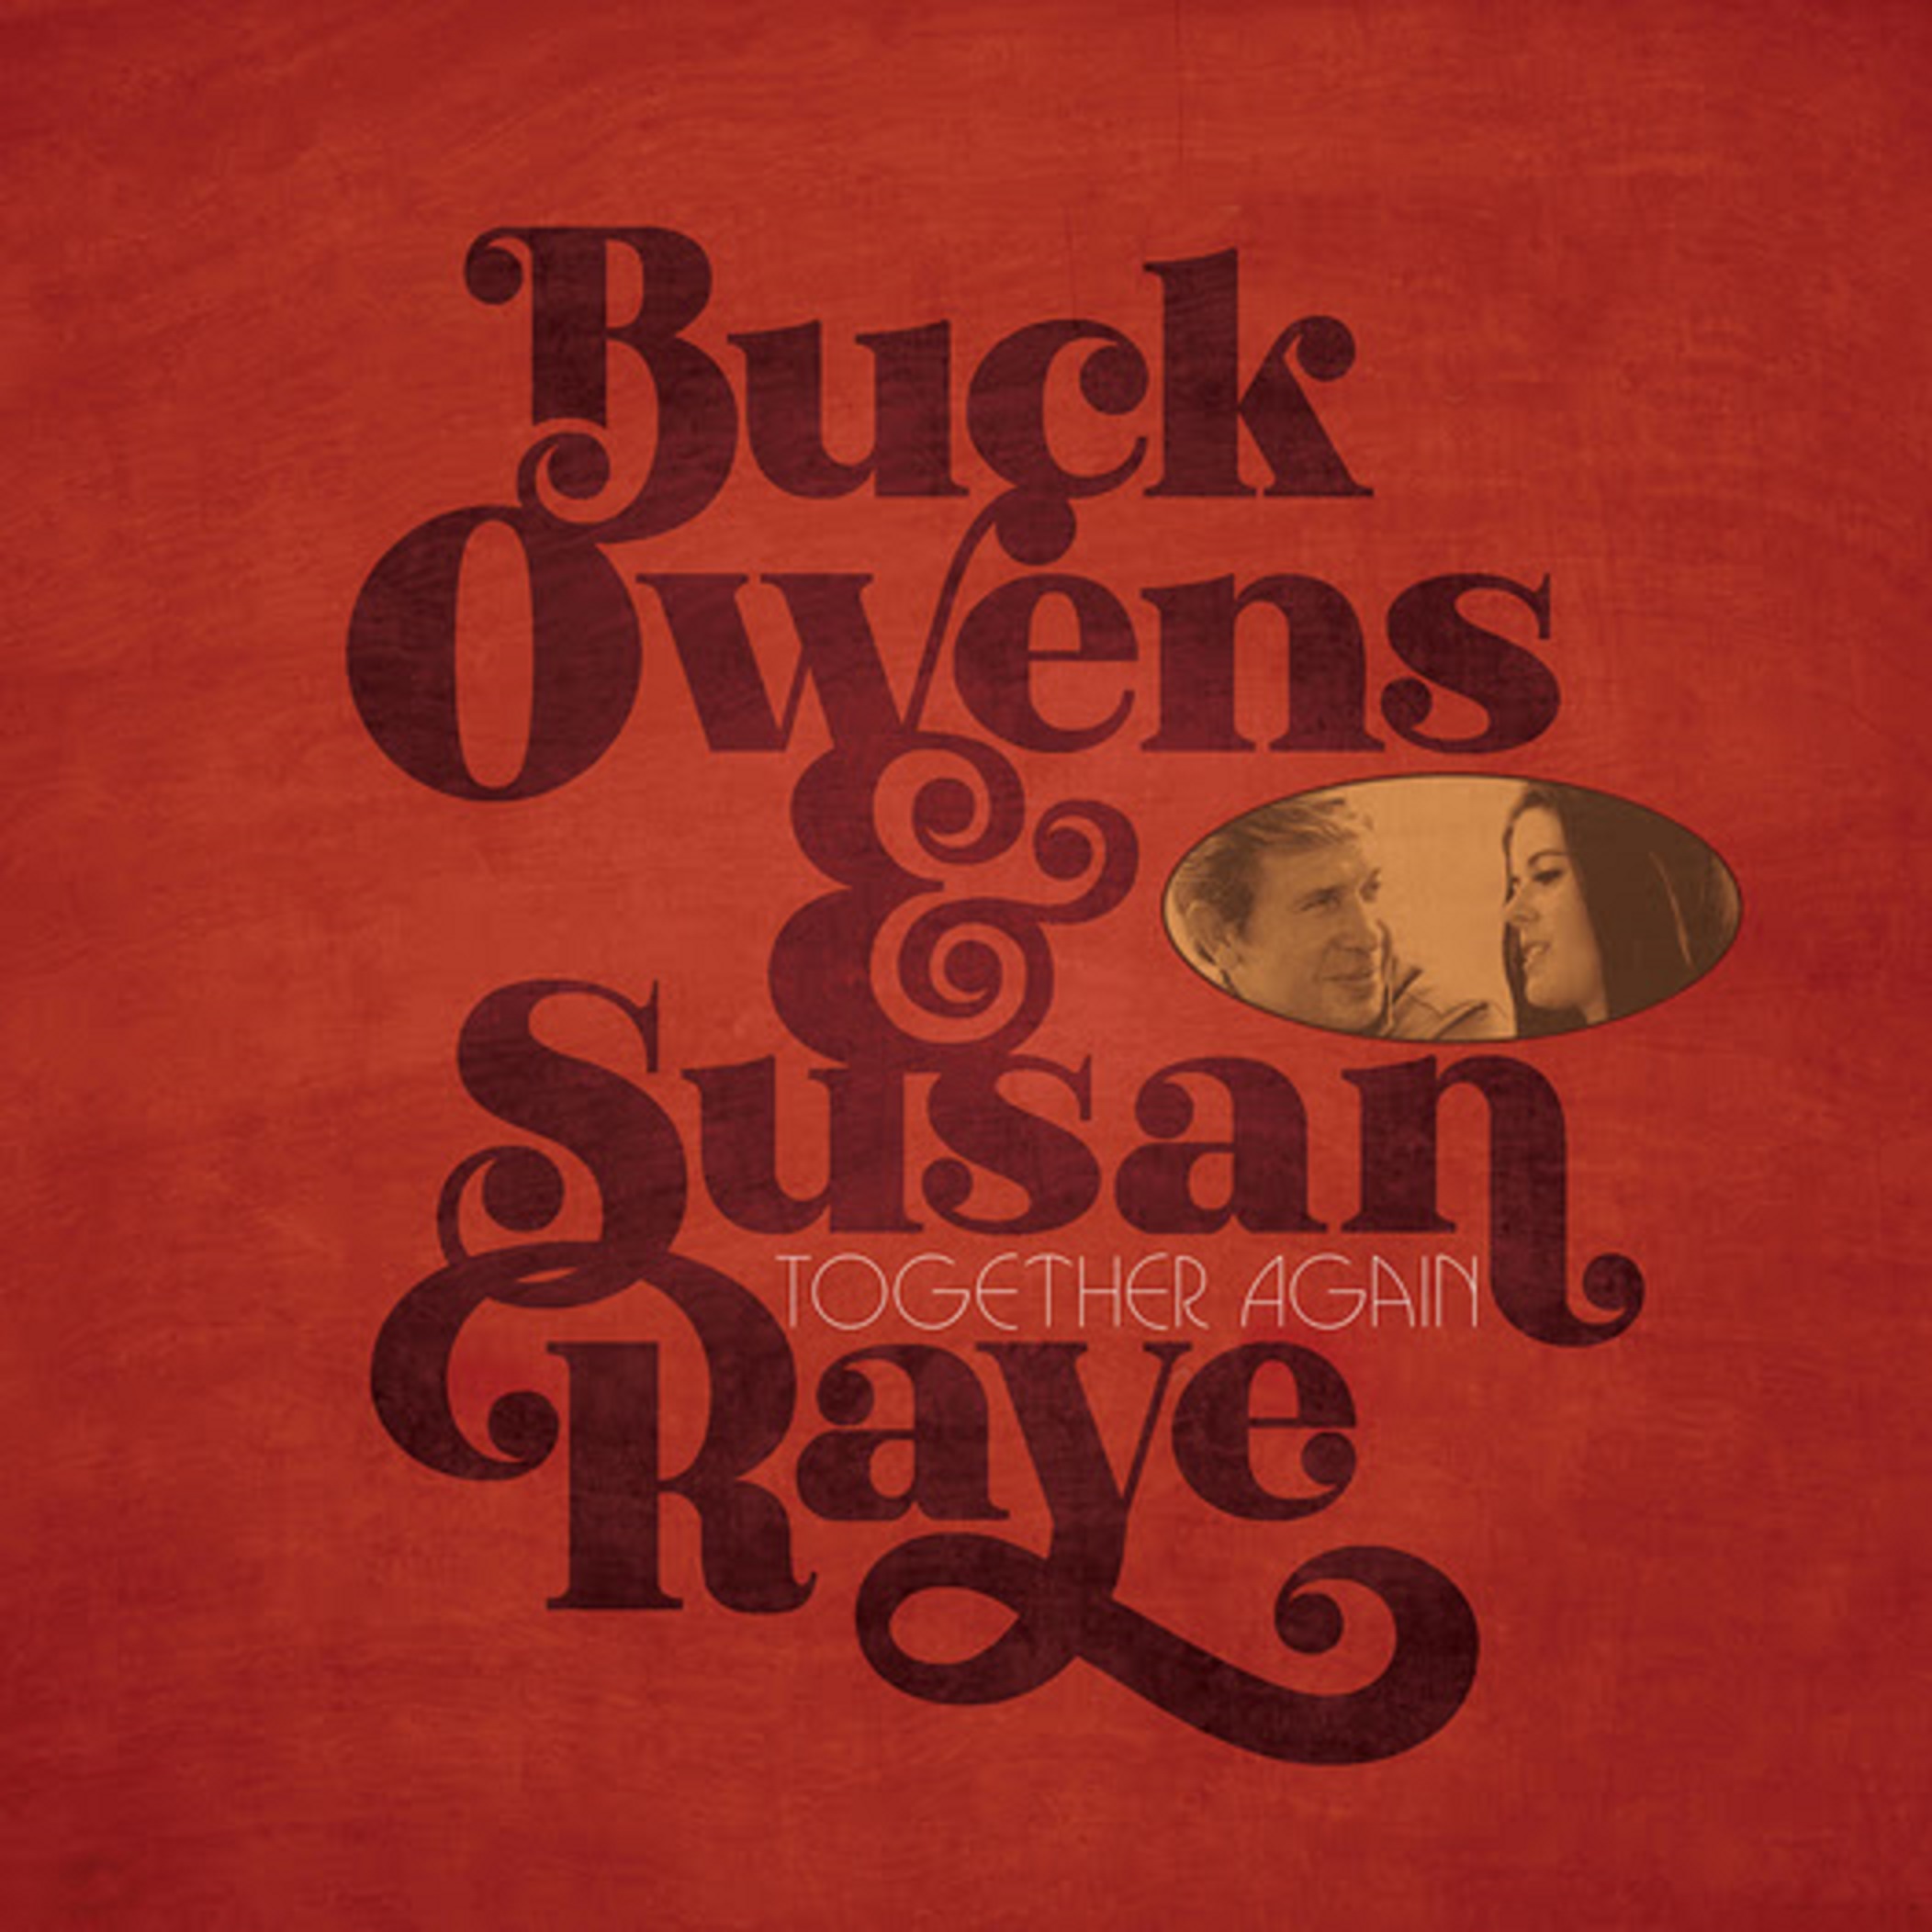 Buck Owens & Susan Raye's 'Together Again'